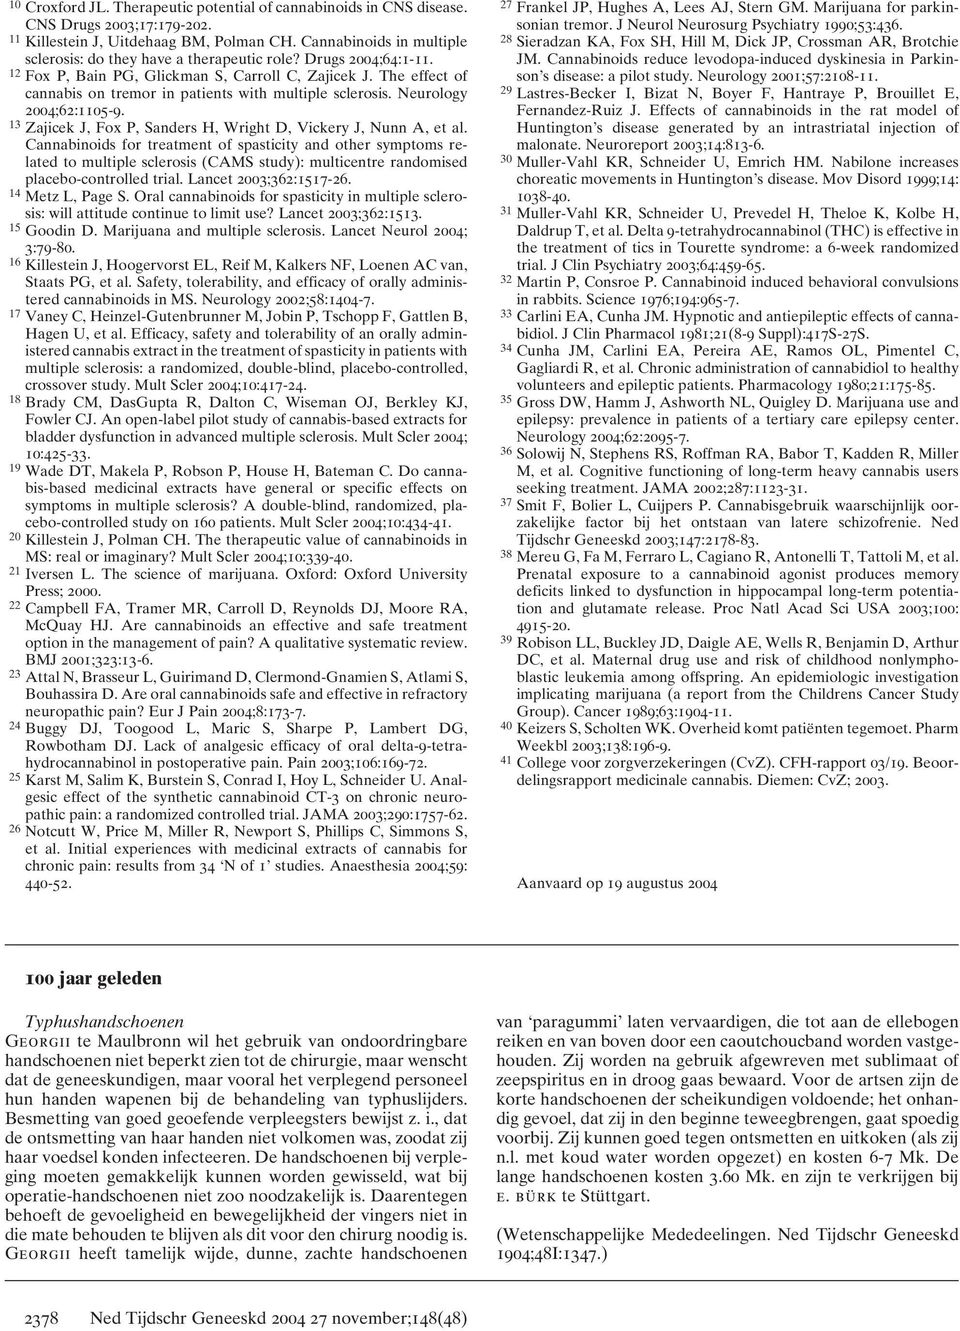 The effect of cannabis on tremor in patients with multiple sclerosis. Neurology 2004;62:1105-9. 13 Zajicek J, Fox P, Sanders H, Wright D, Vickery J, Nunn A, et al.